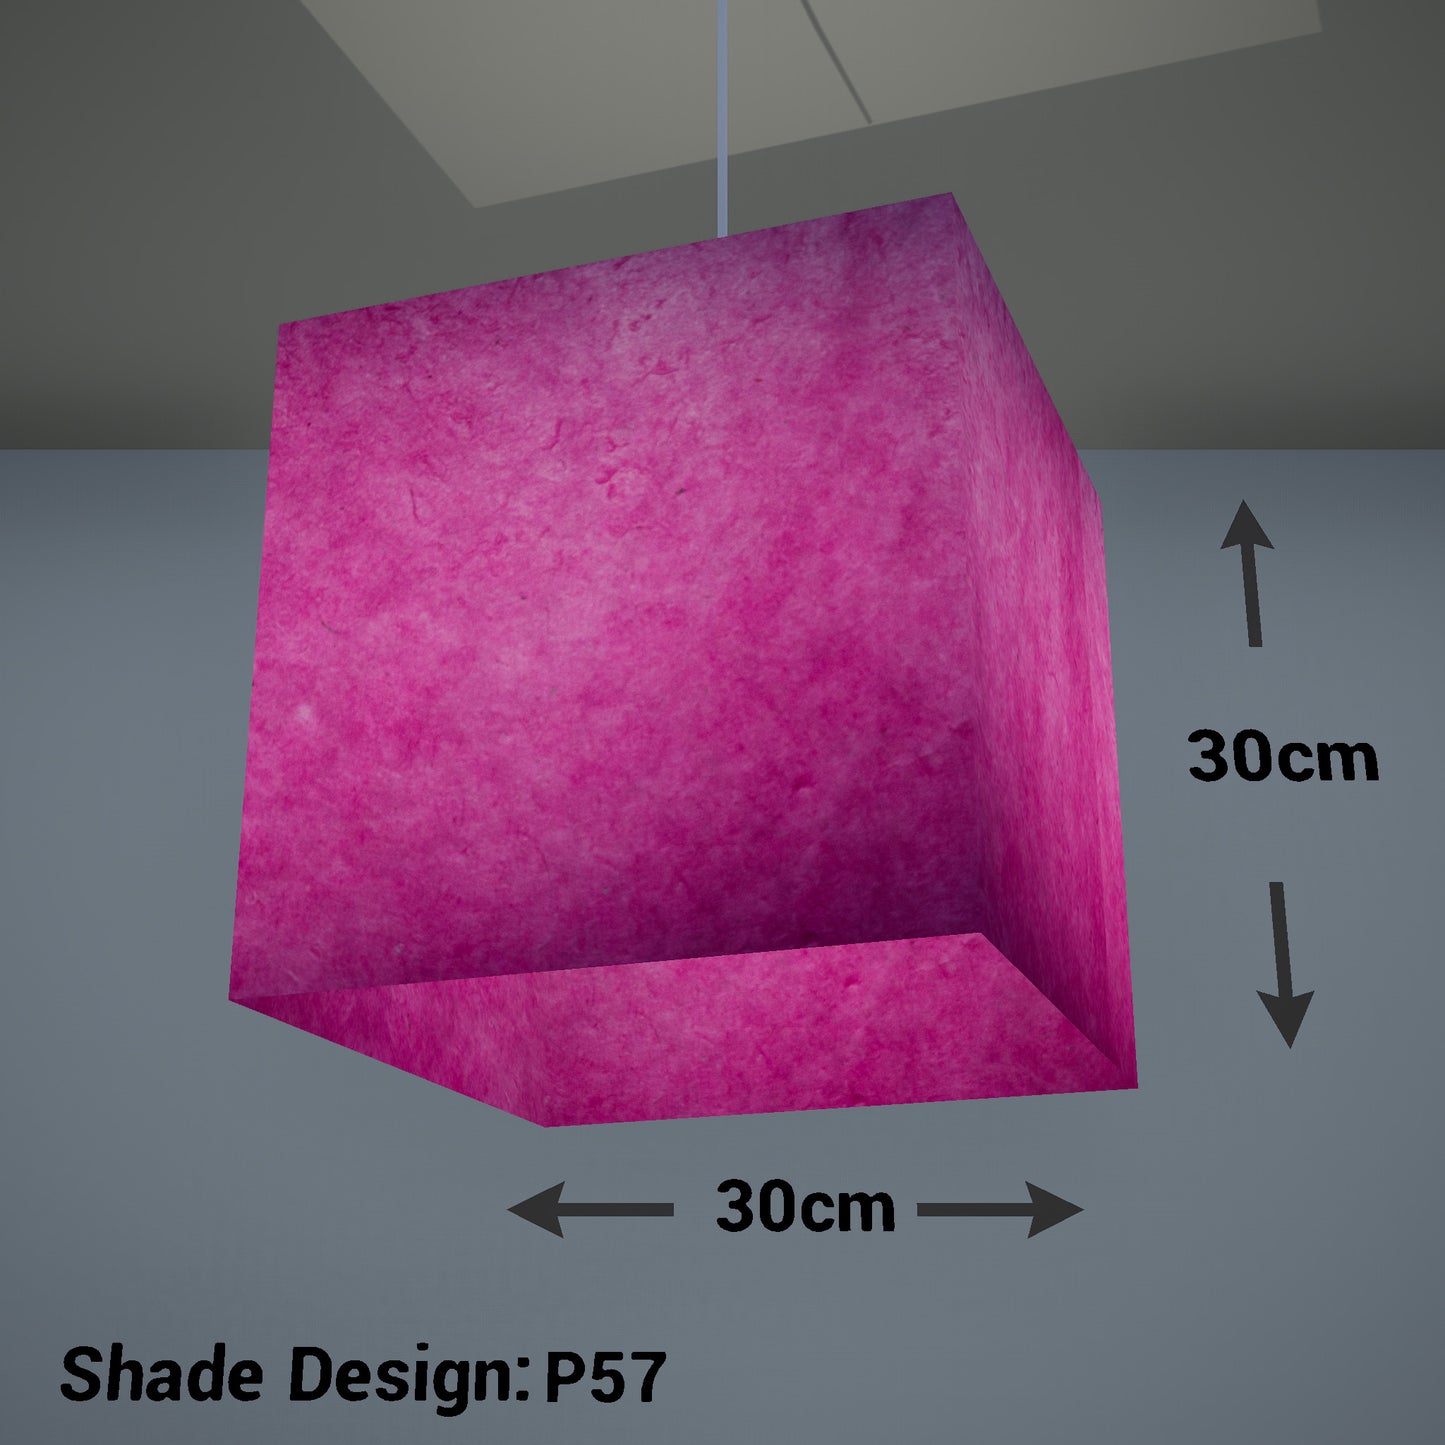 Square Lamp Shade - P57 - Hot Pink Lokta, 30cm(w) x 30cm(h) x 30cm(d)